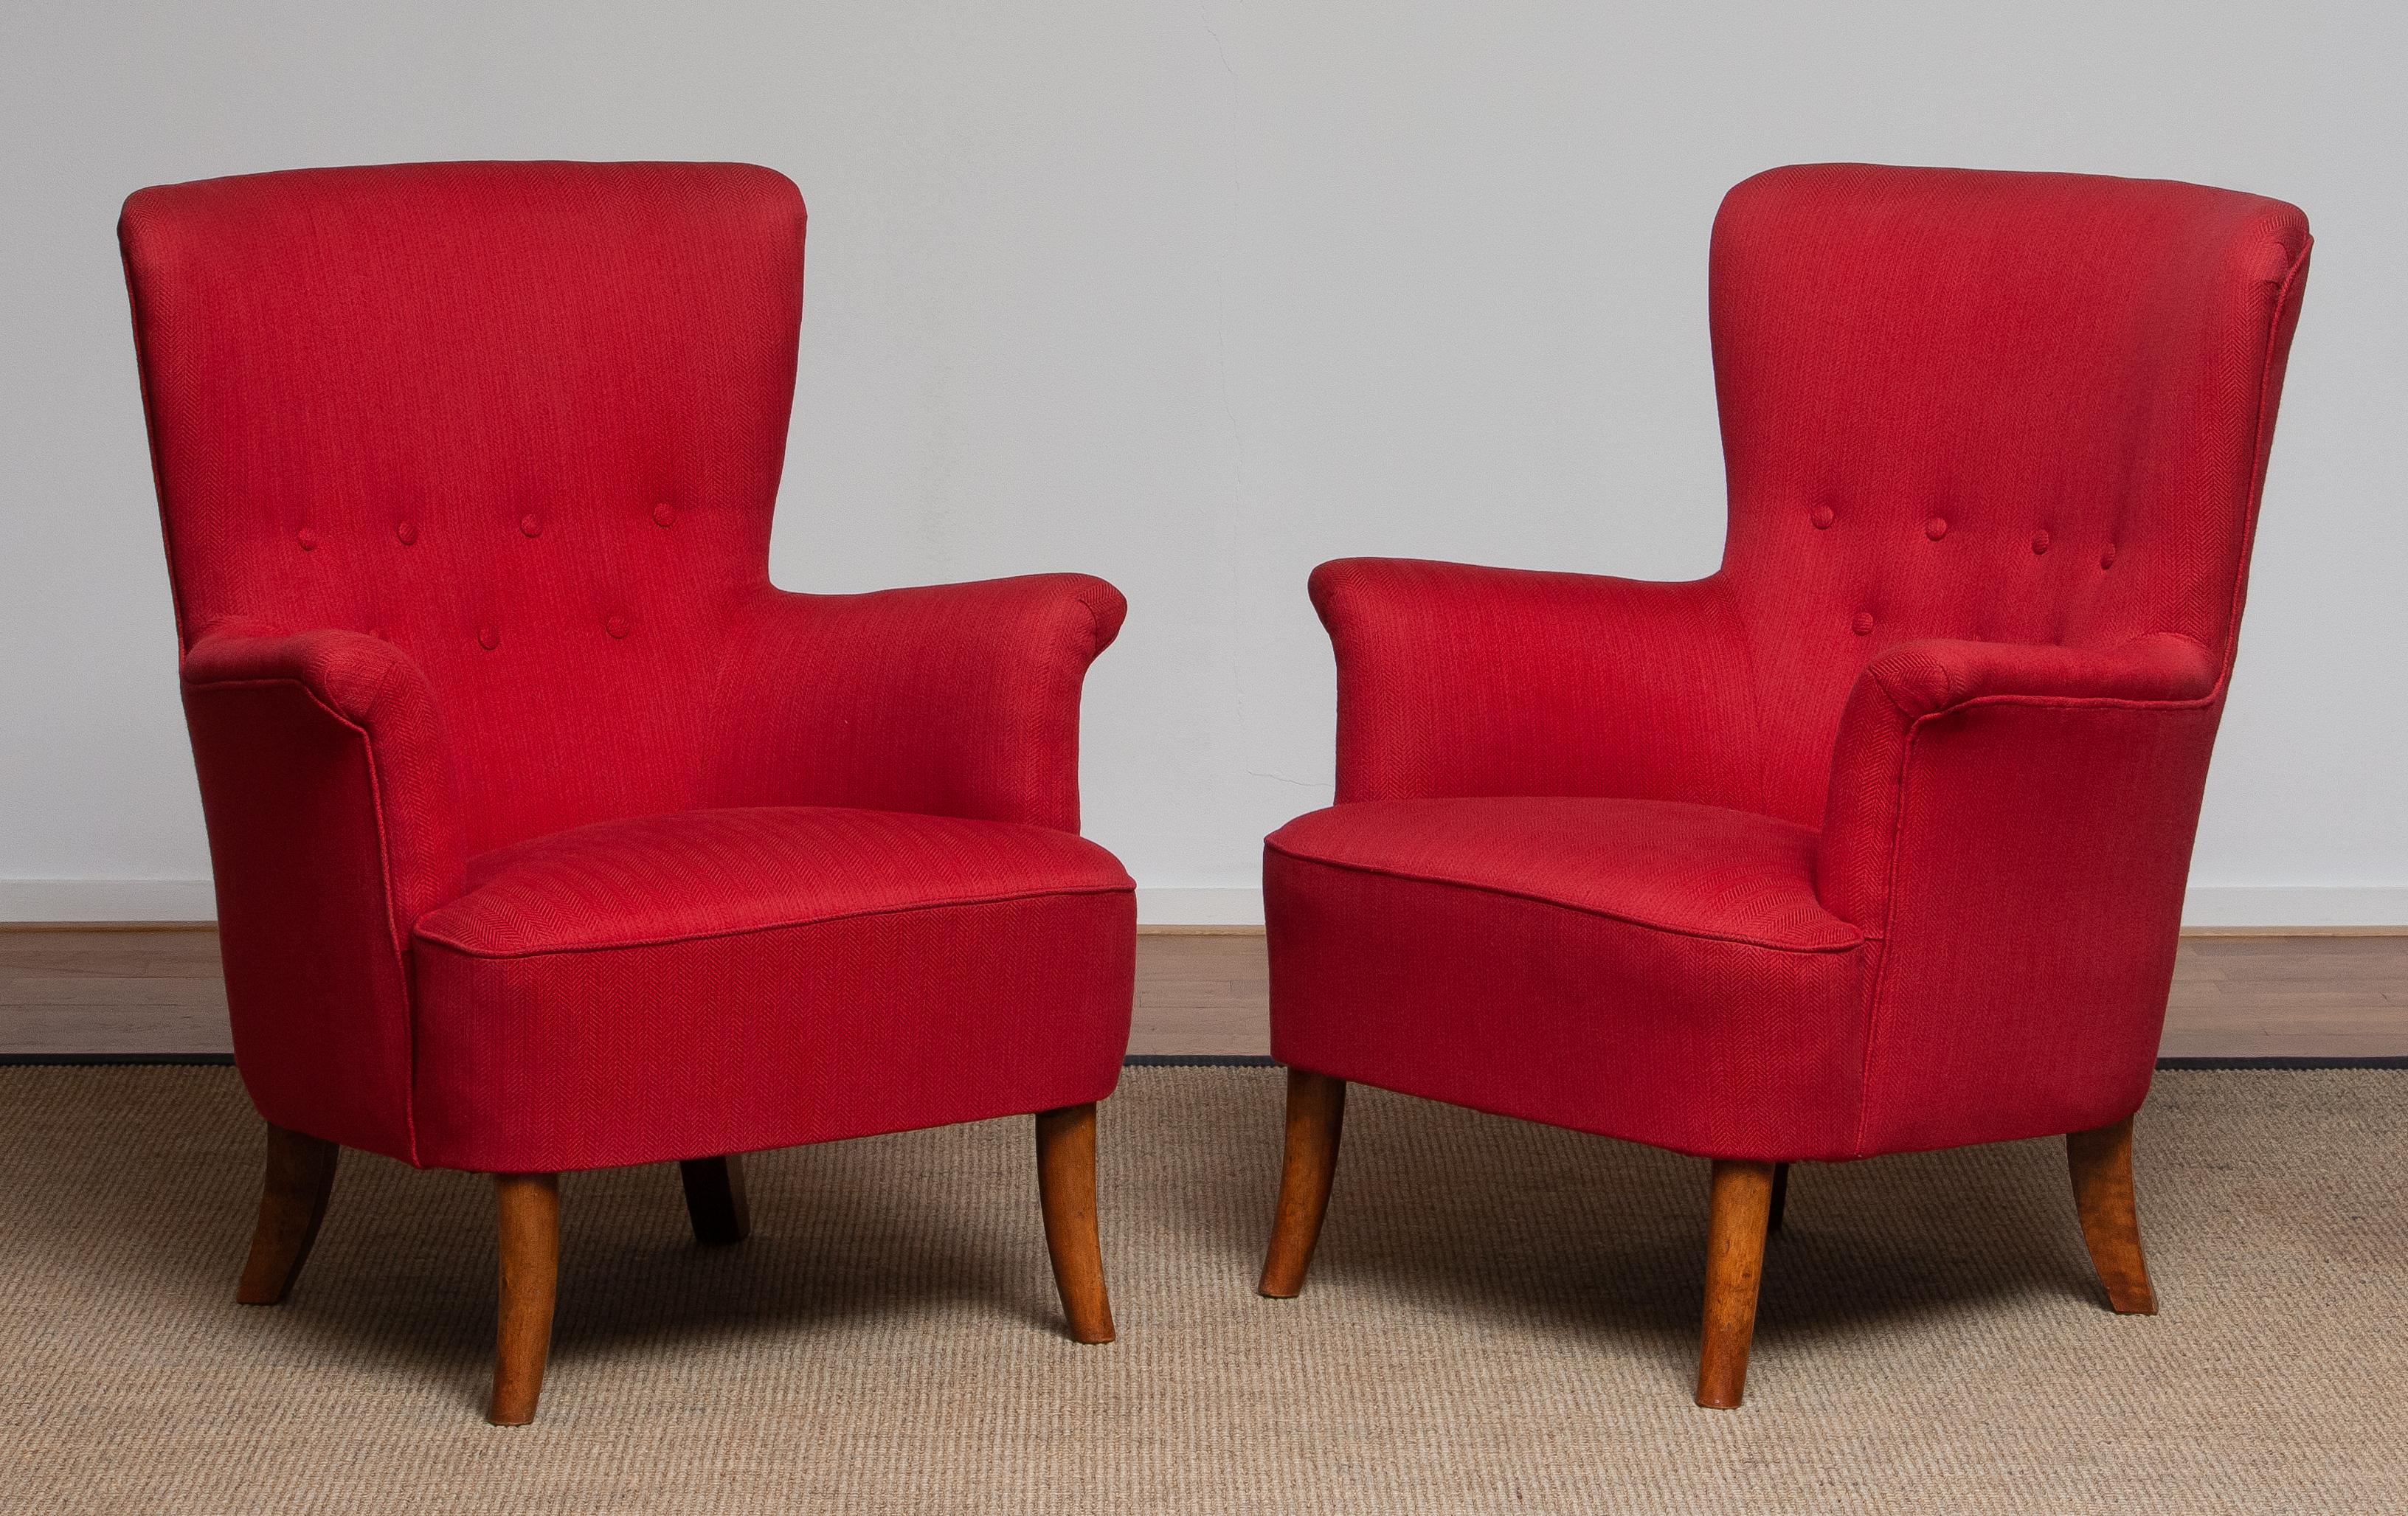 1940s, Fuchsia Easy / Lounge Lounge Chair by Carl Malmsten for Oh Sjogren Sweden 8